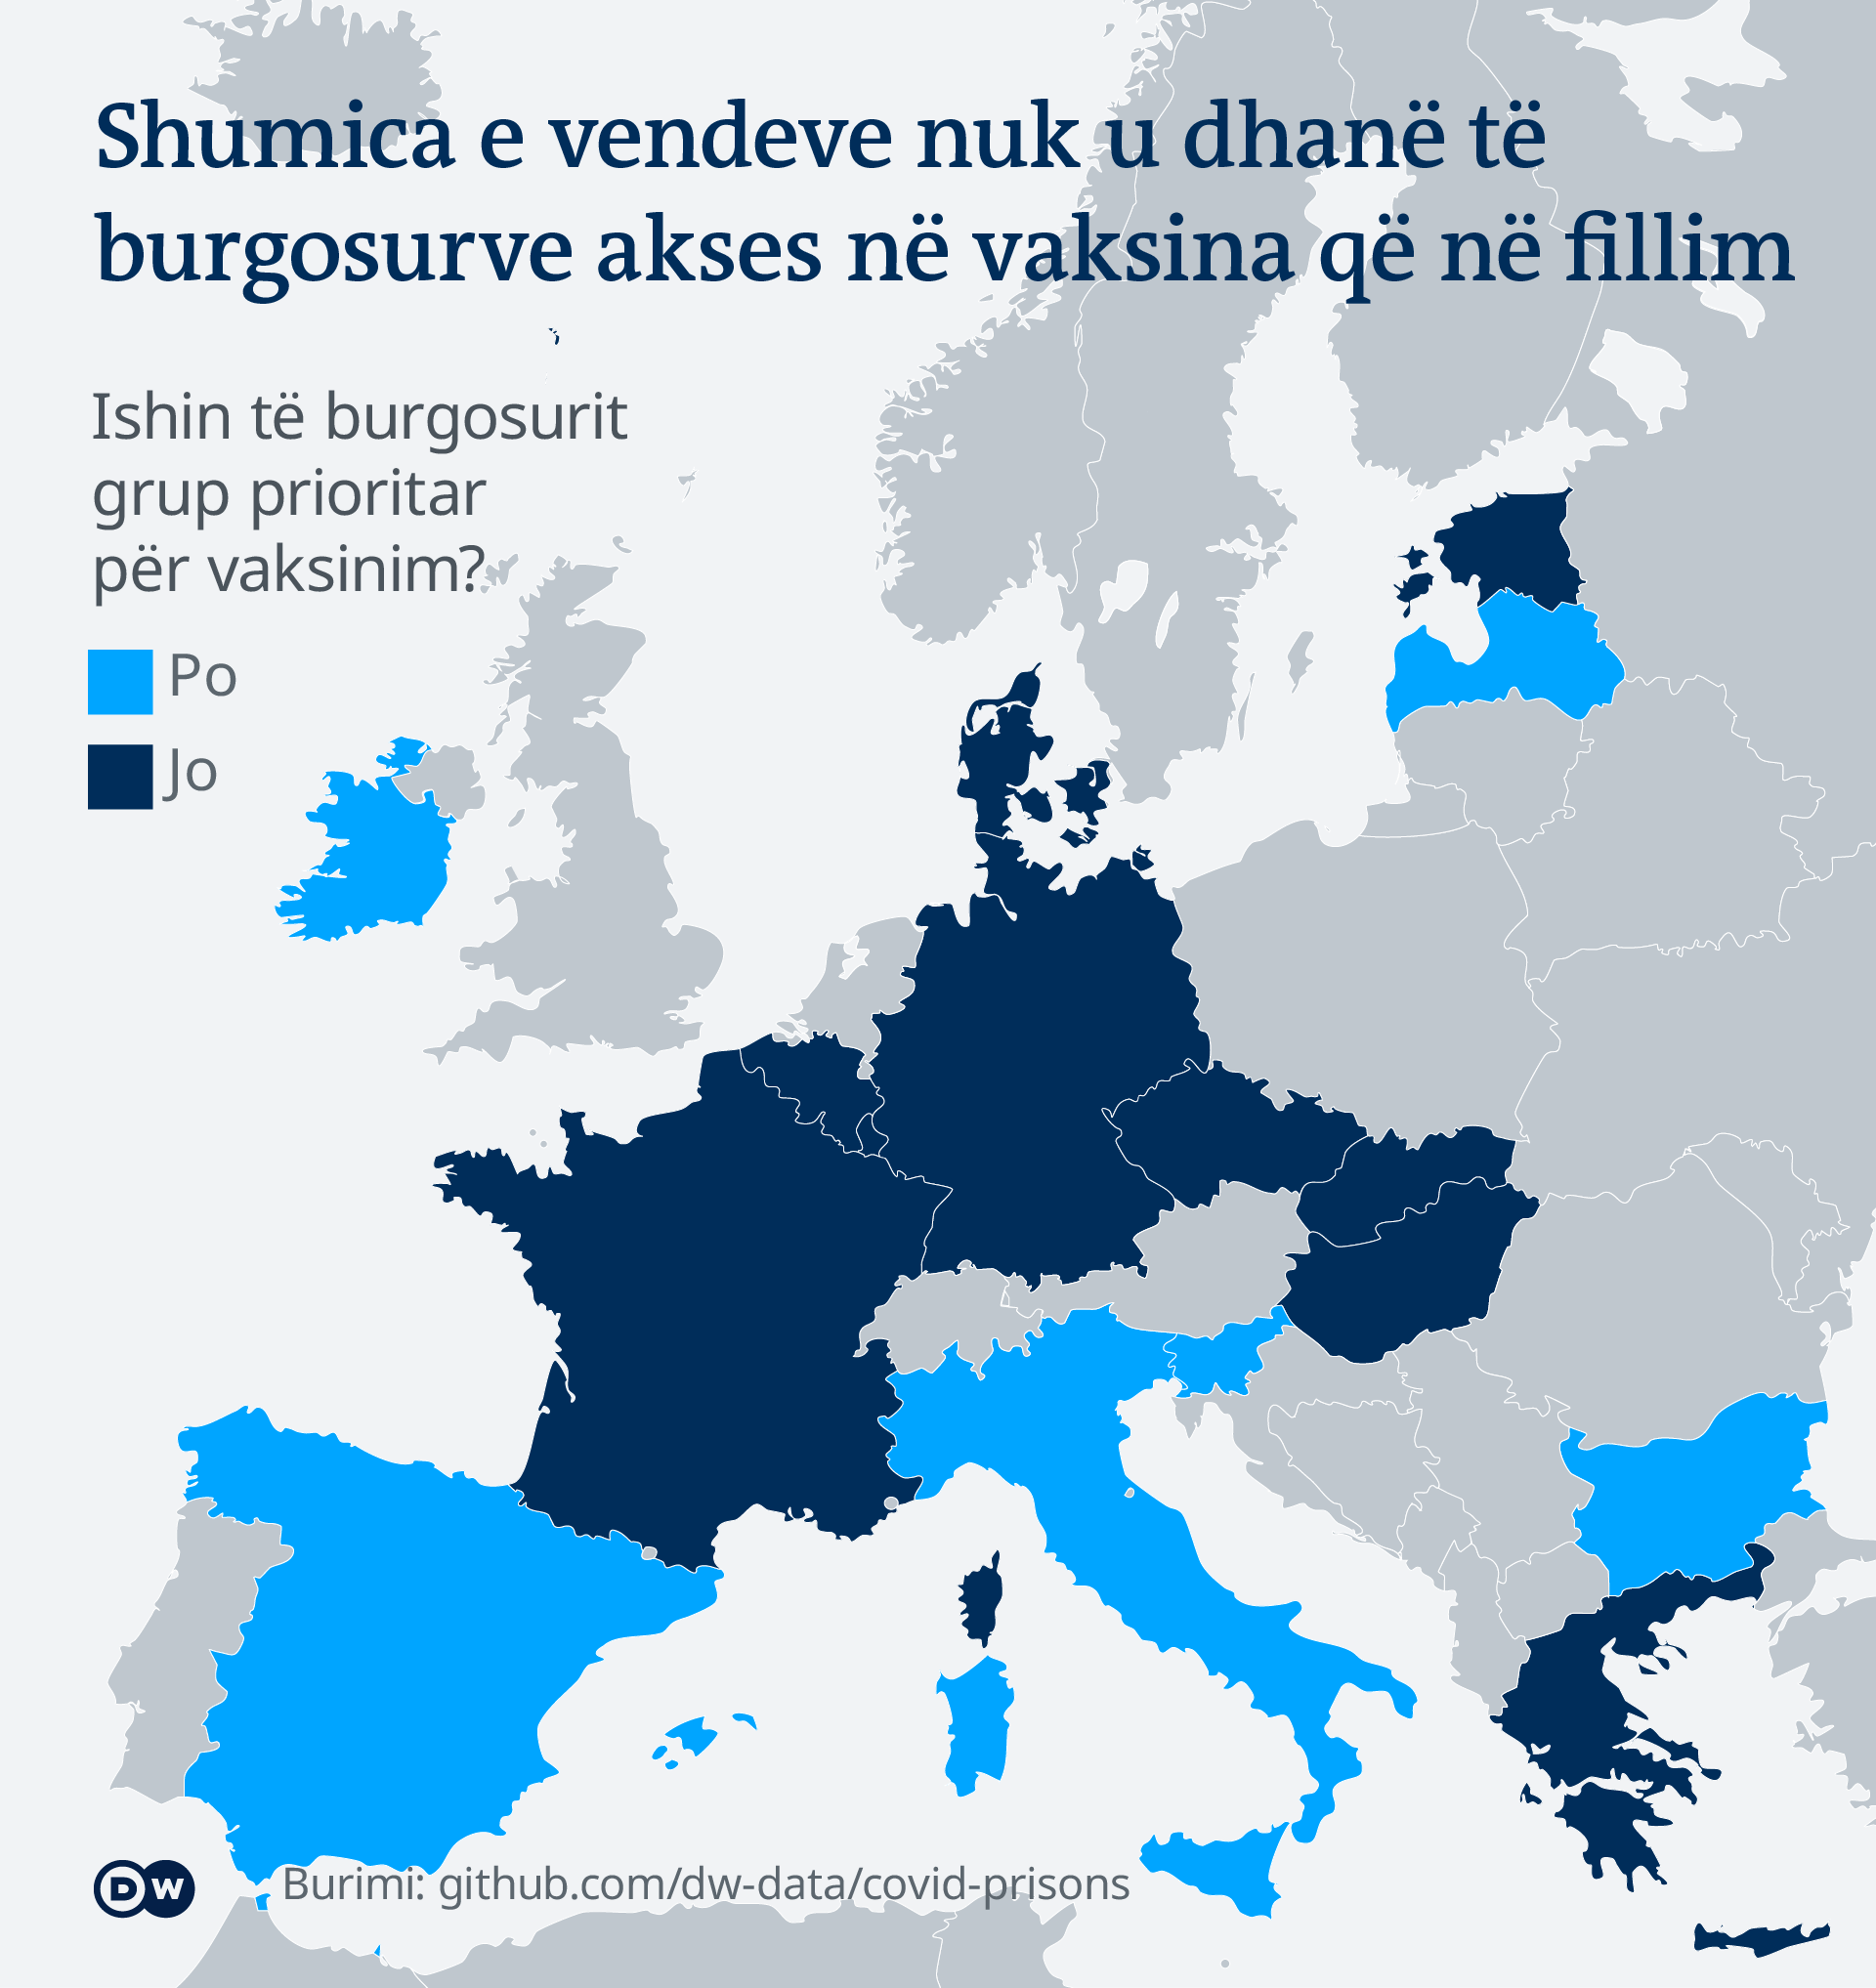 Data visualization prisons and Covid EDJNet SQ Albanian